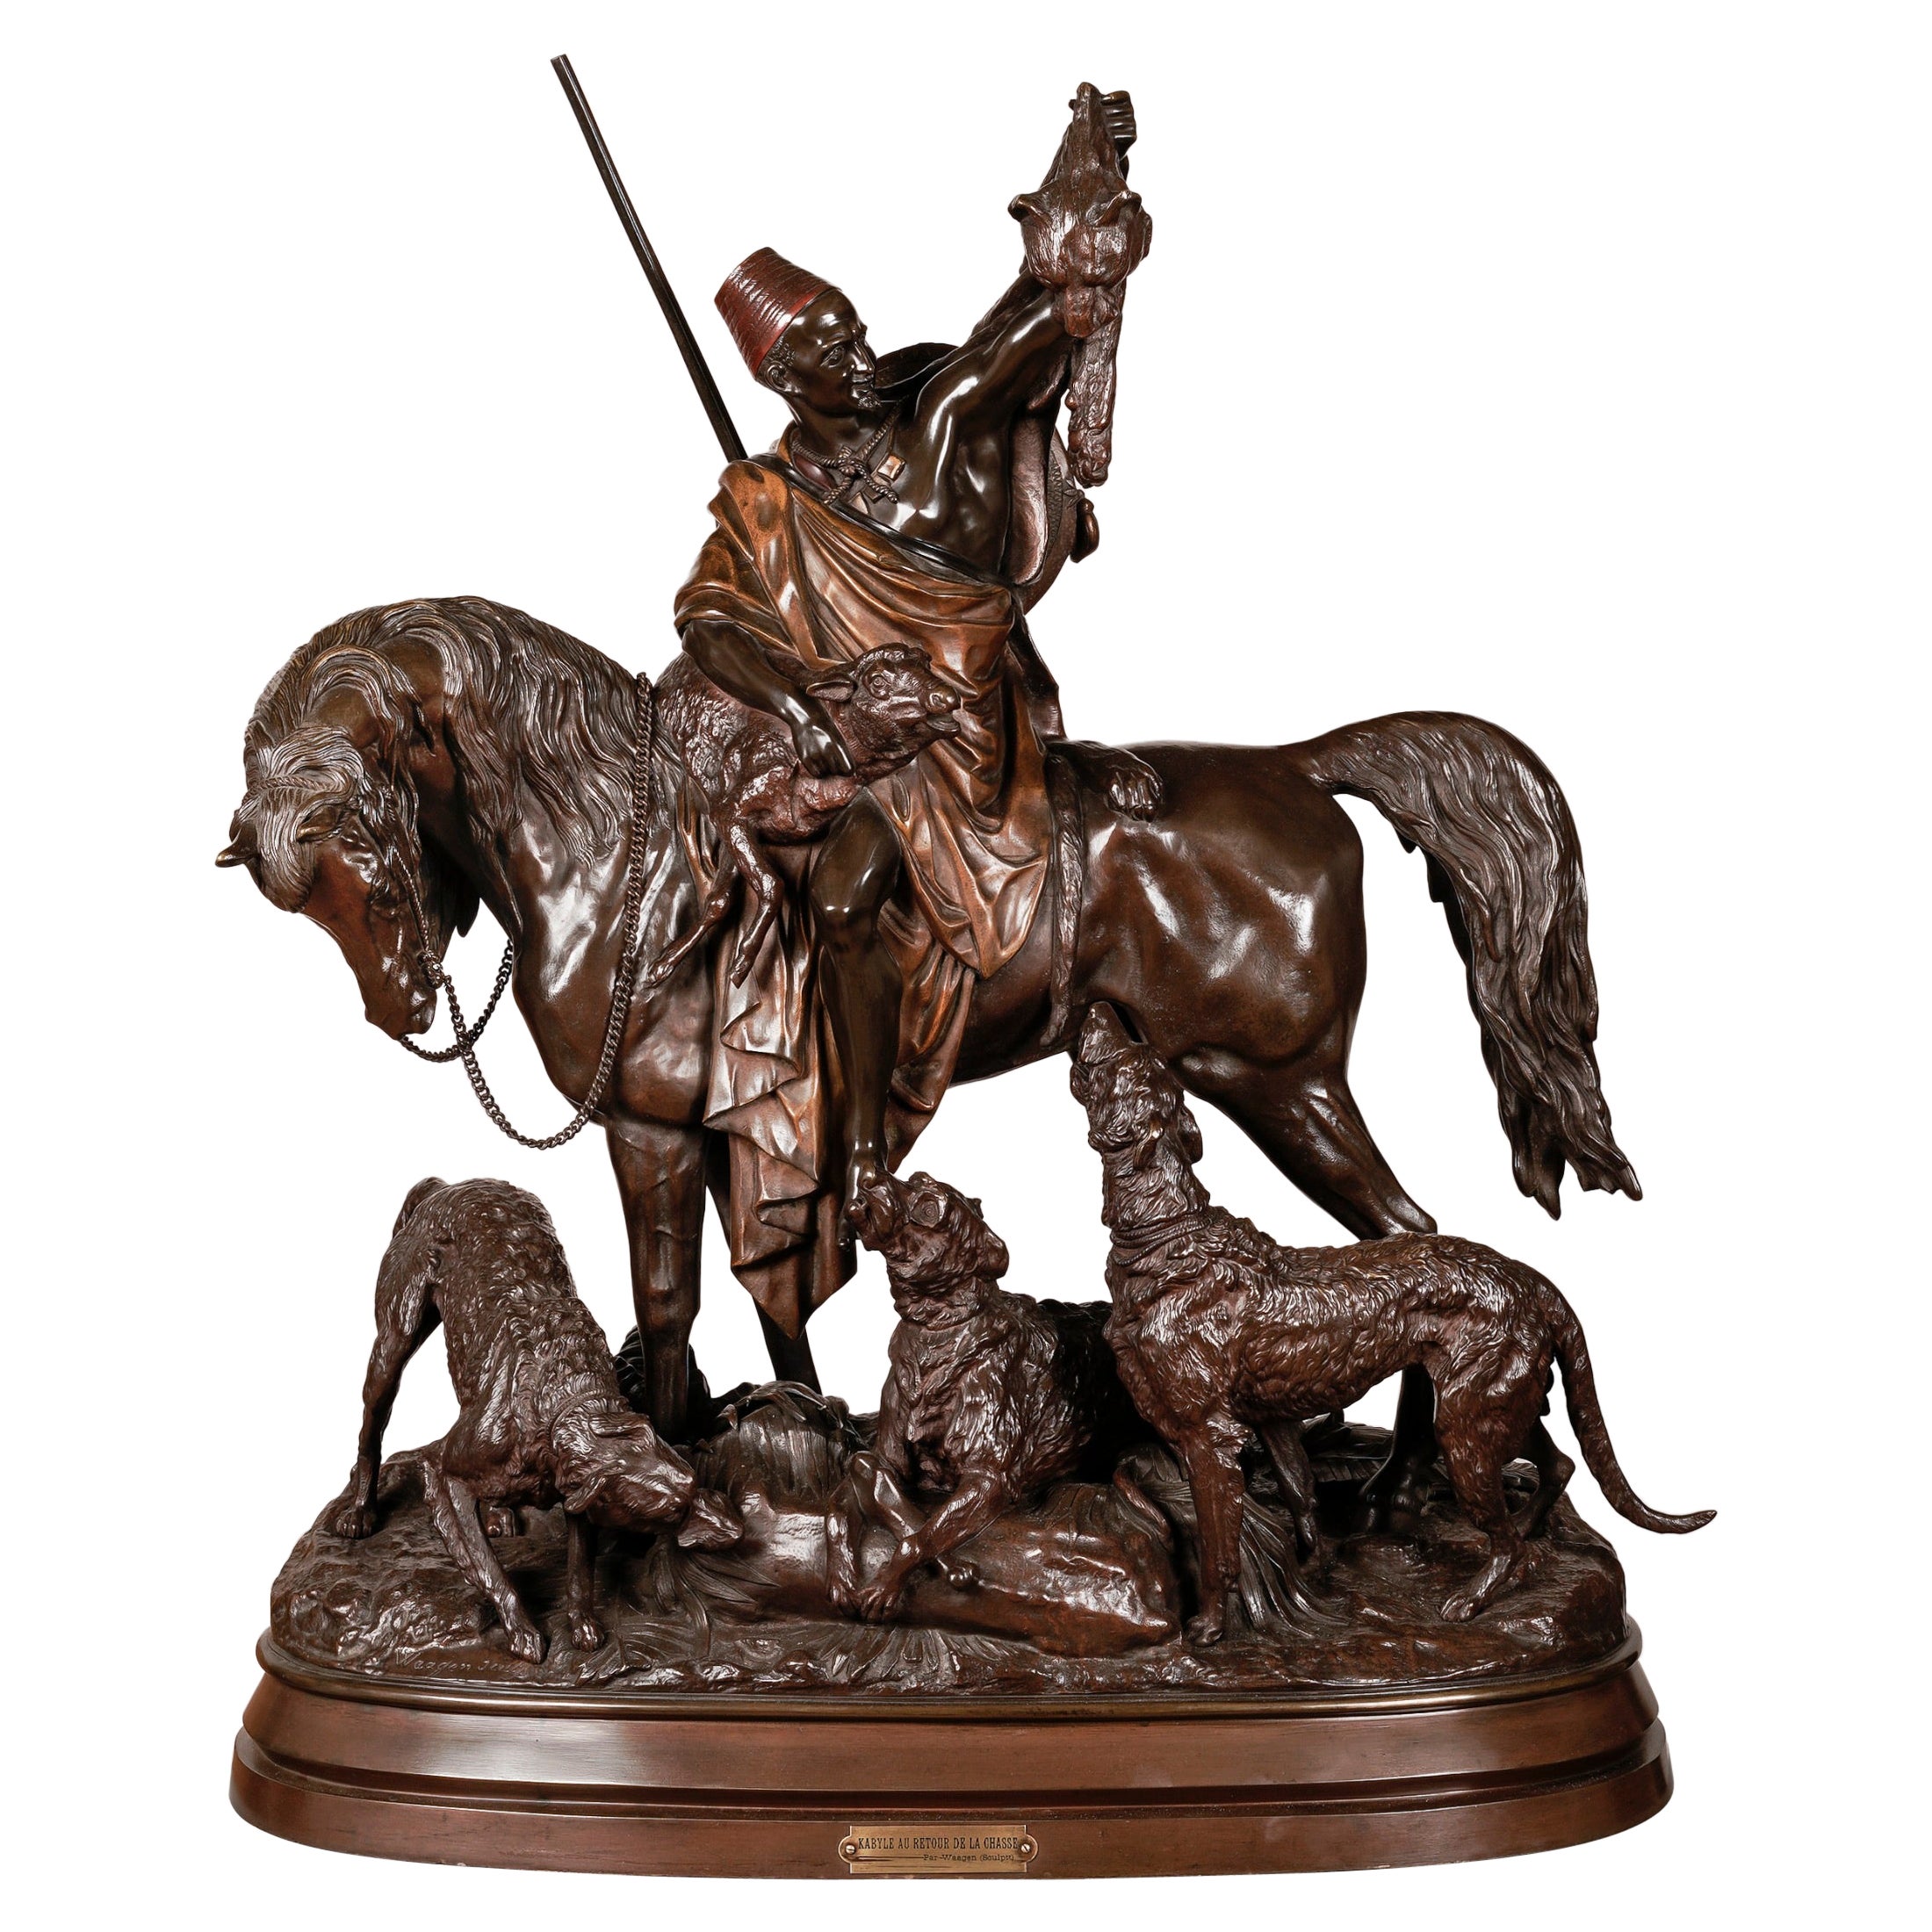 Bronzeskulptur des 19. Jahrhunderts „Kabyle au retour de la chasse“ von Waagen